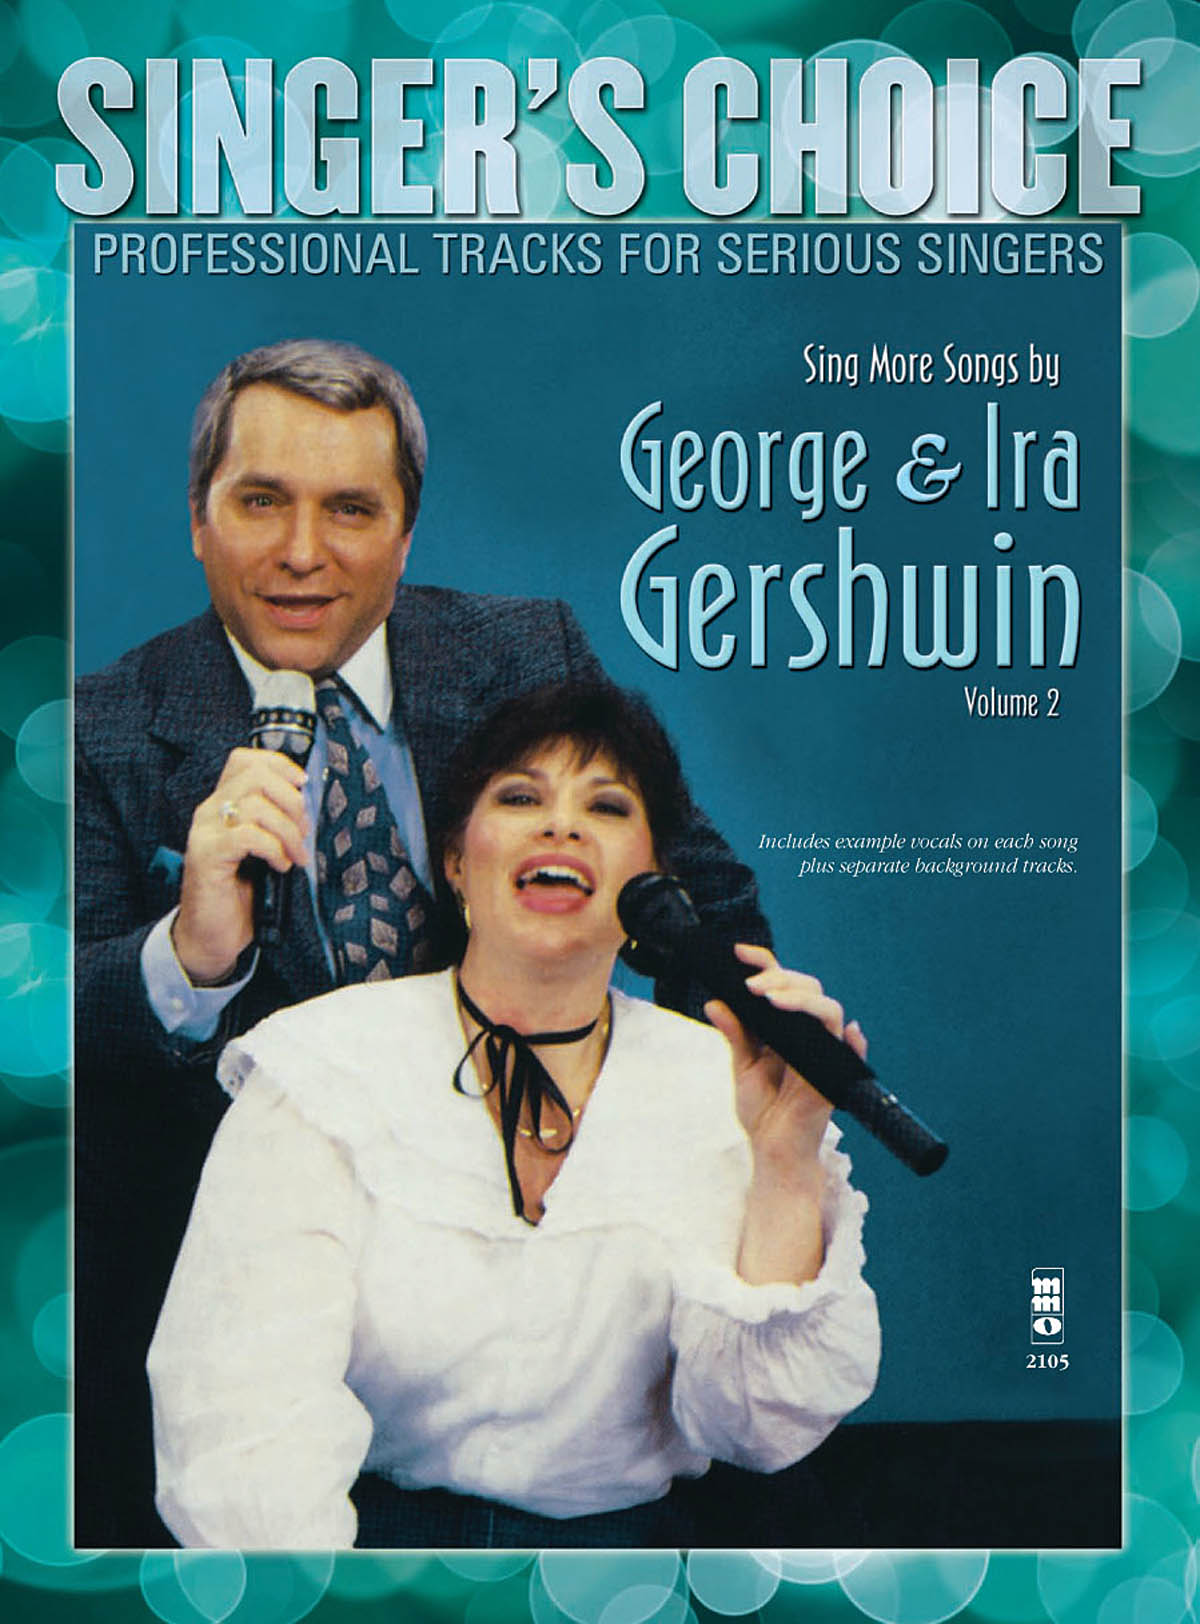 George Gershwin Ira Gershwin: Sing More Songs by George & Ira Gershwin (Vol. 2):